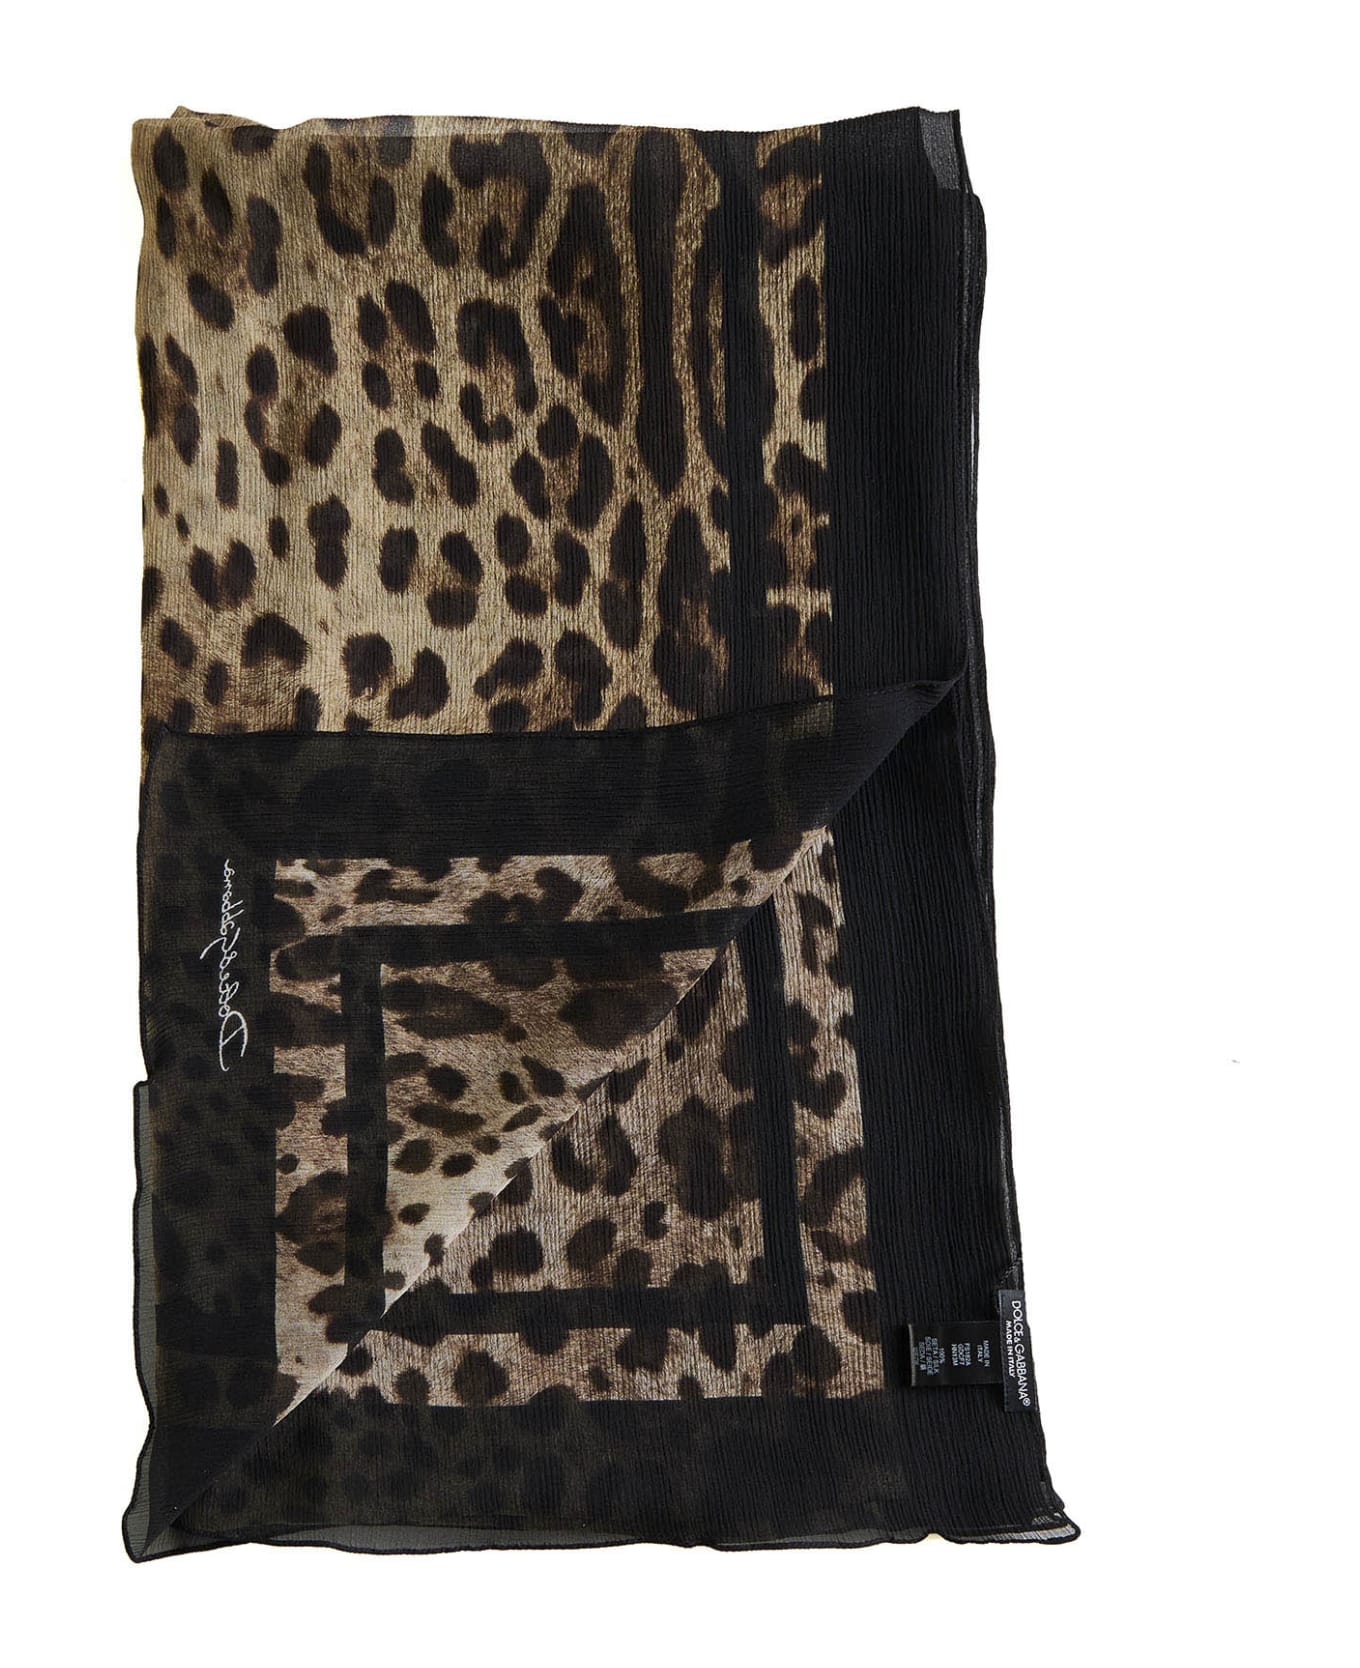 Dolce & Gabbana 'leopard' Scarf - Leo marrone bdo nero